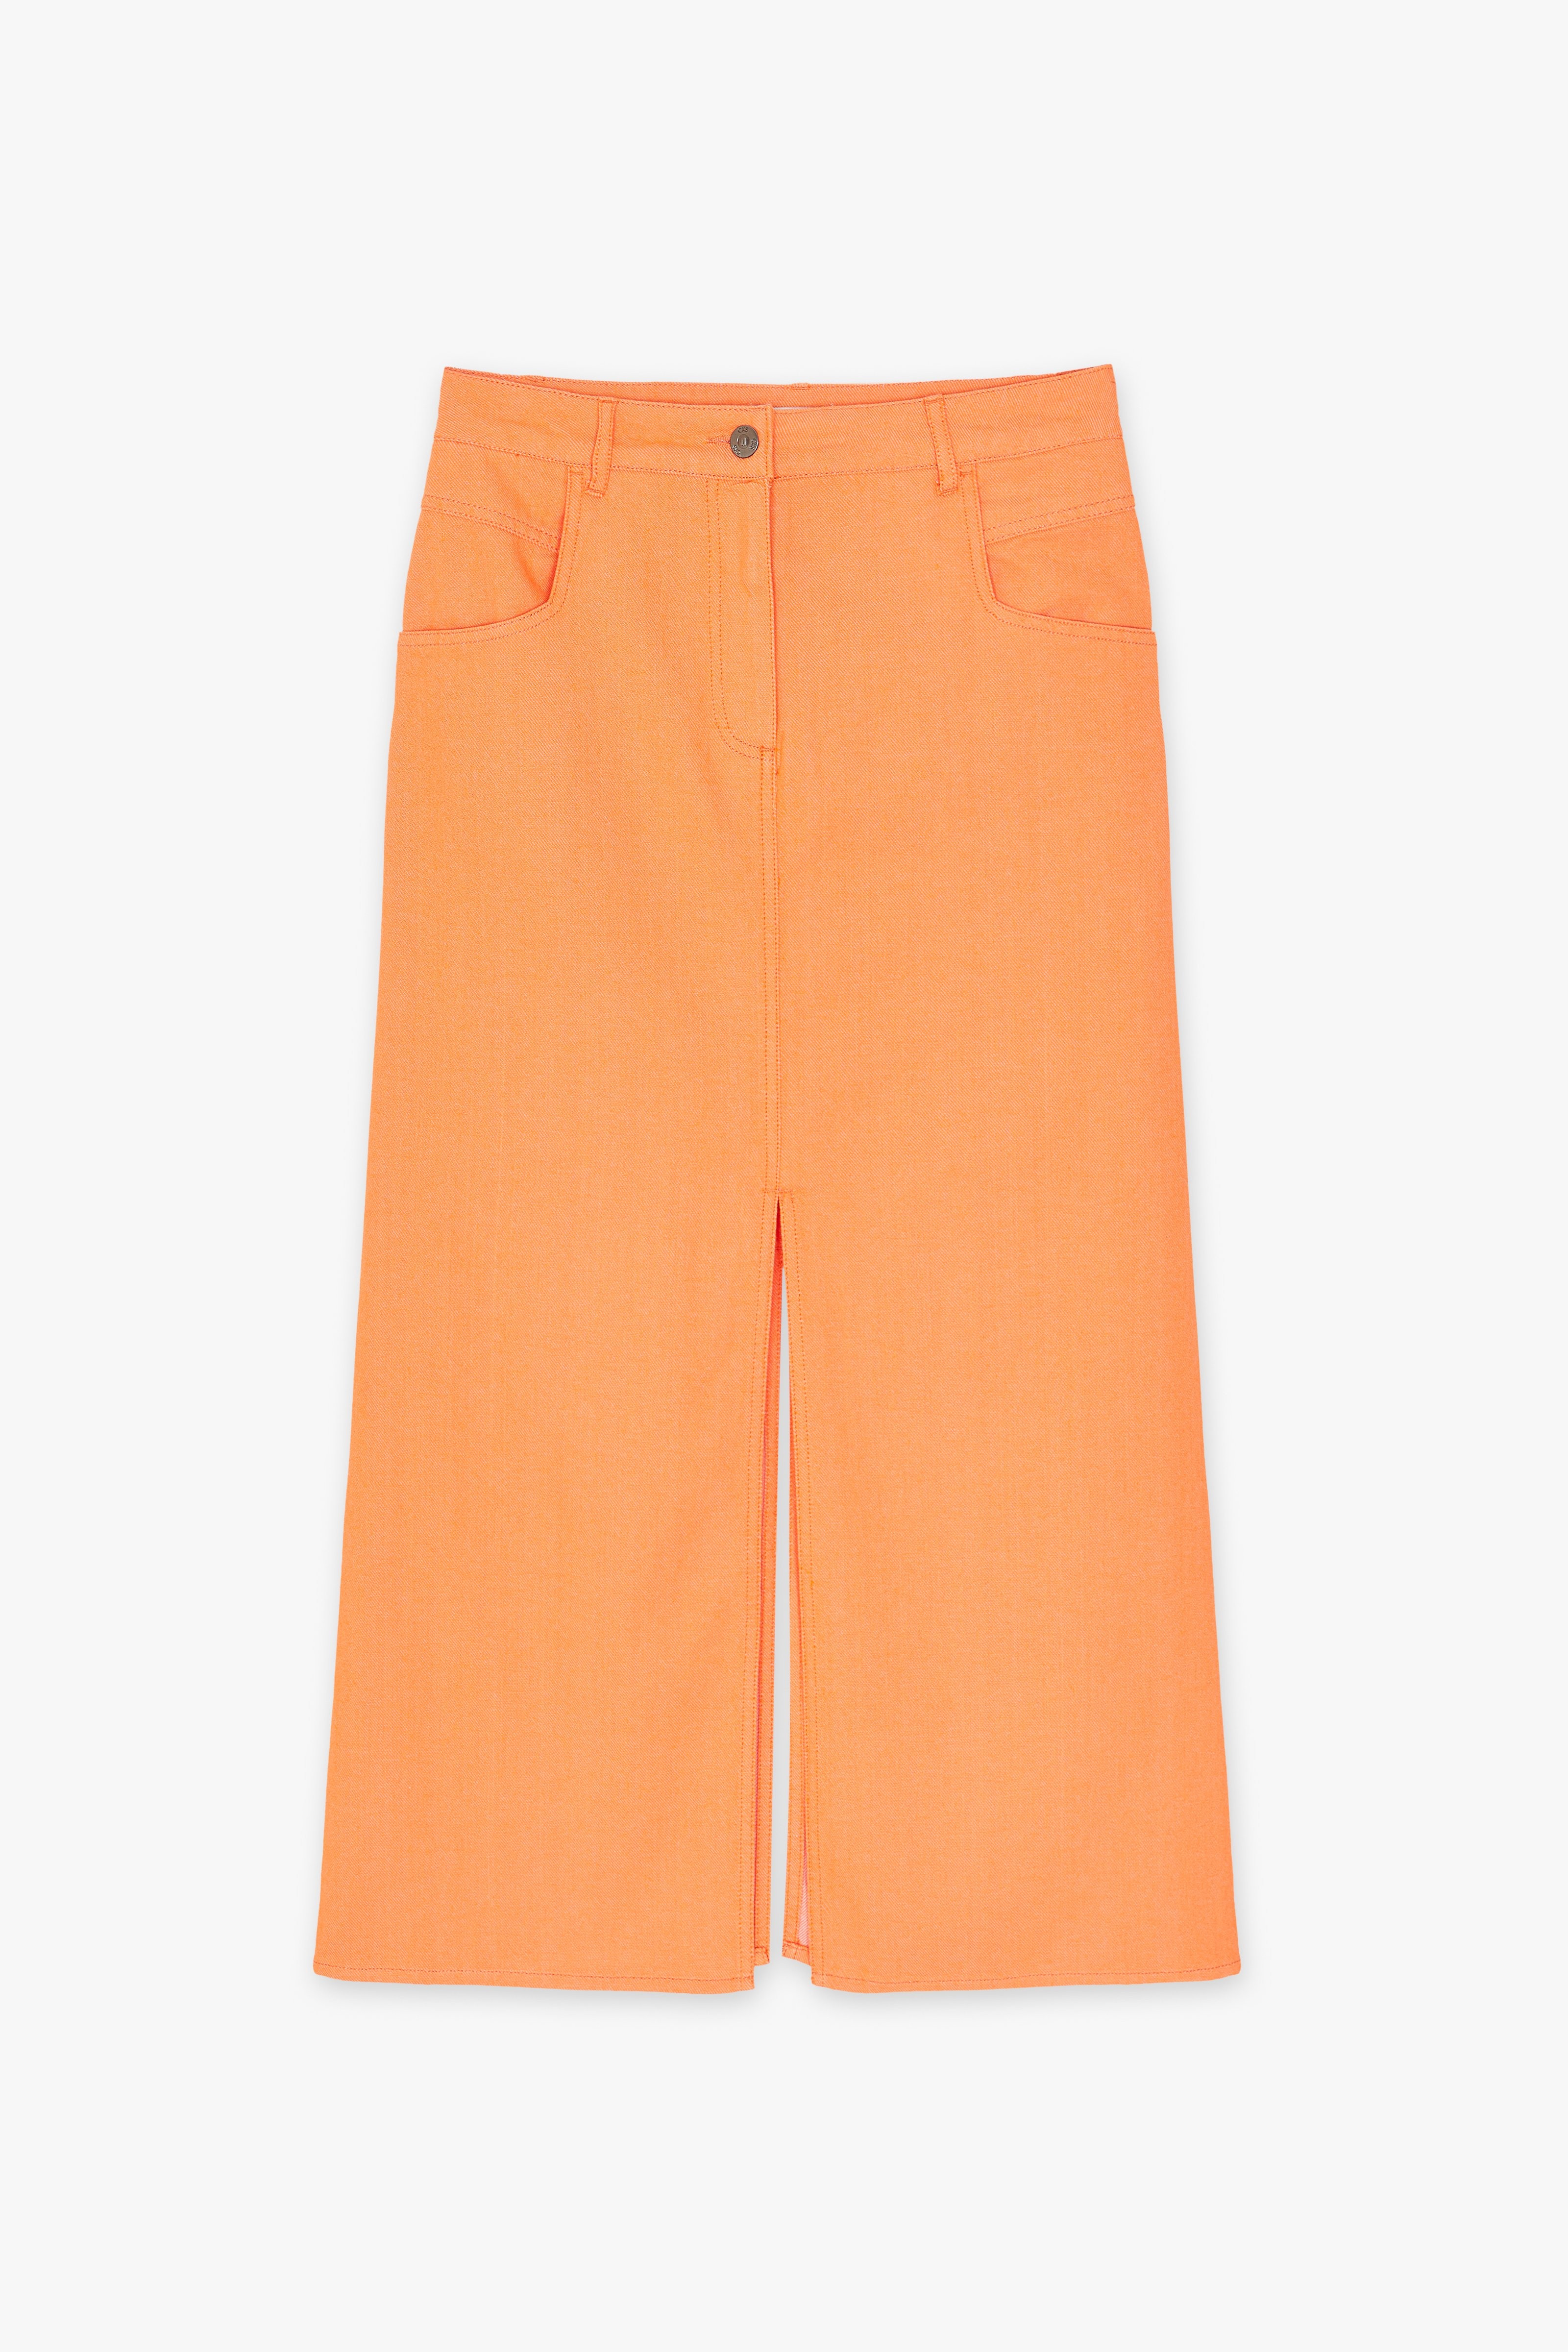 CKS Dames - SKETCH - jupe longue - orange vif